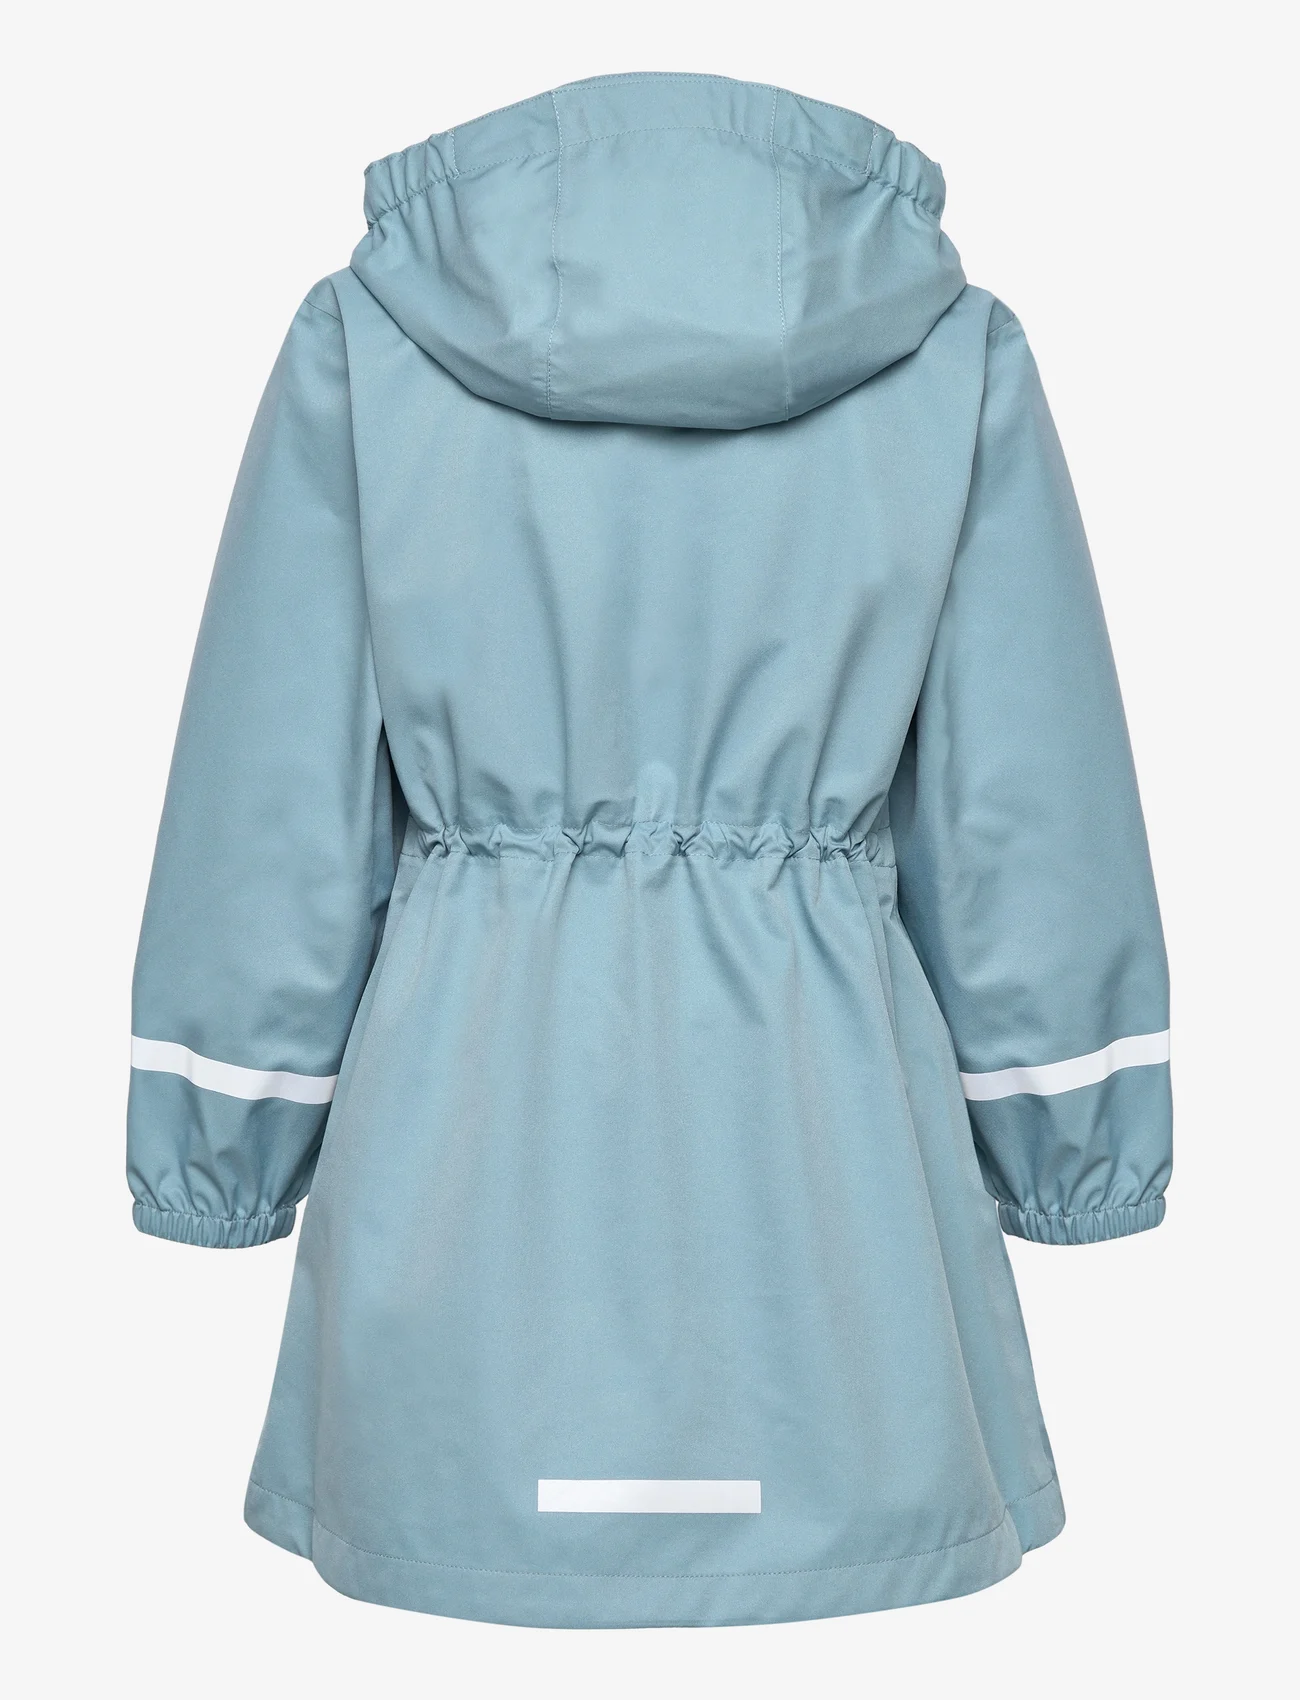 Lindex - Jacket rain coat - rain jackets - dusty blue - 1